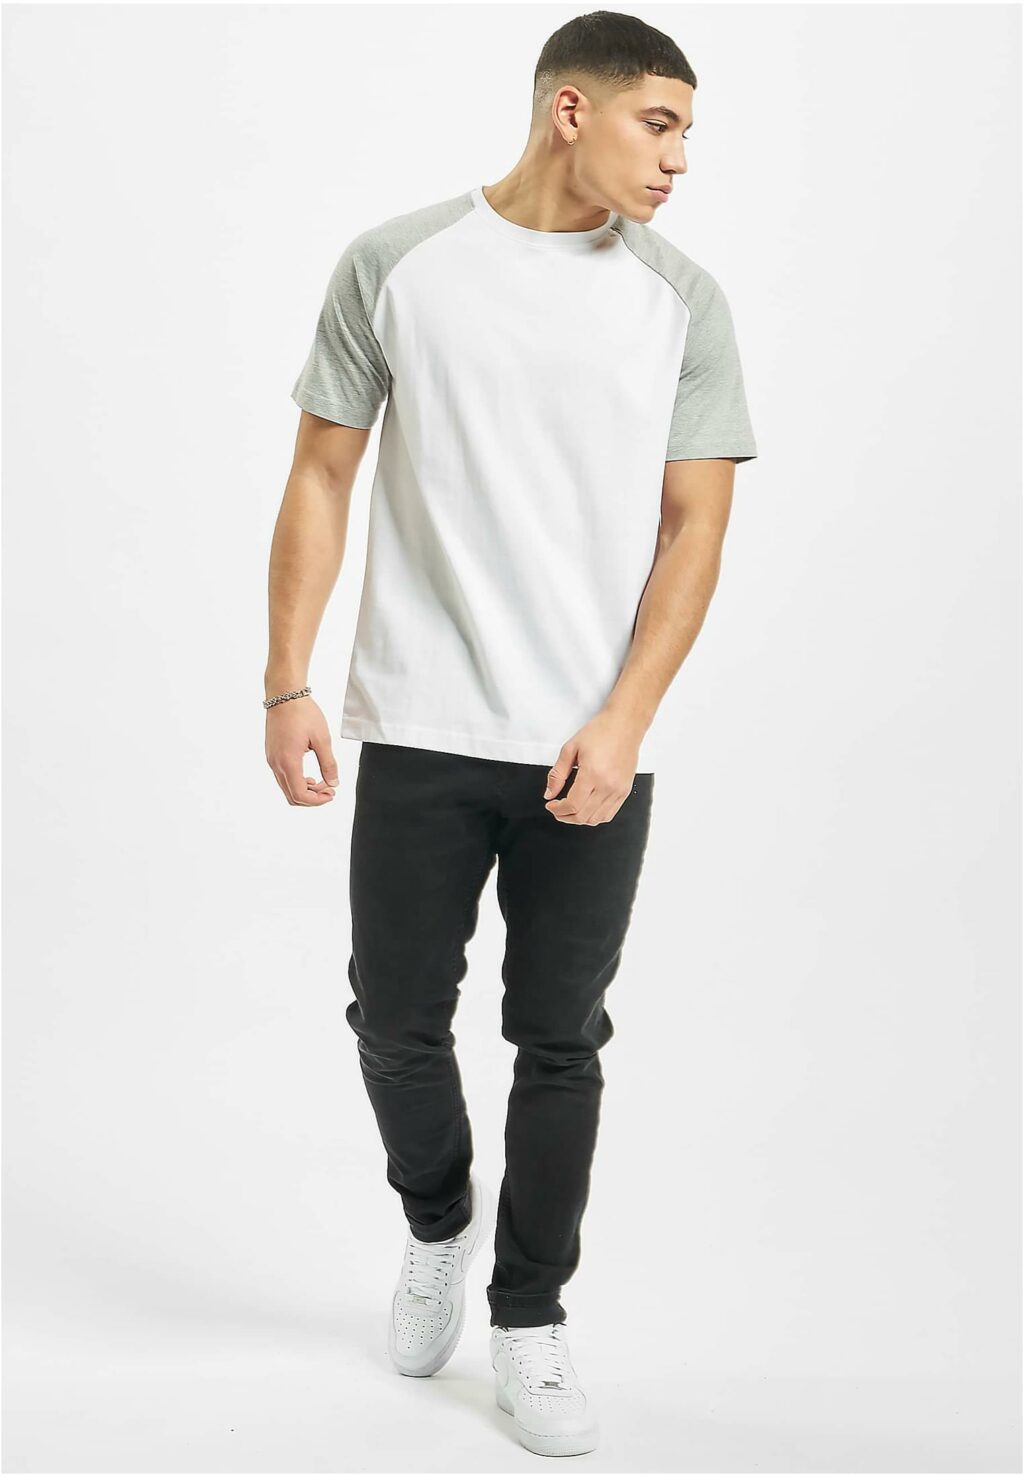 Roy T-Shirt white/grey melange DFTS072